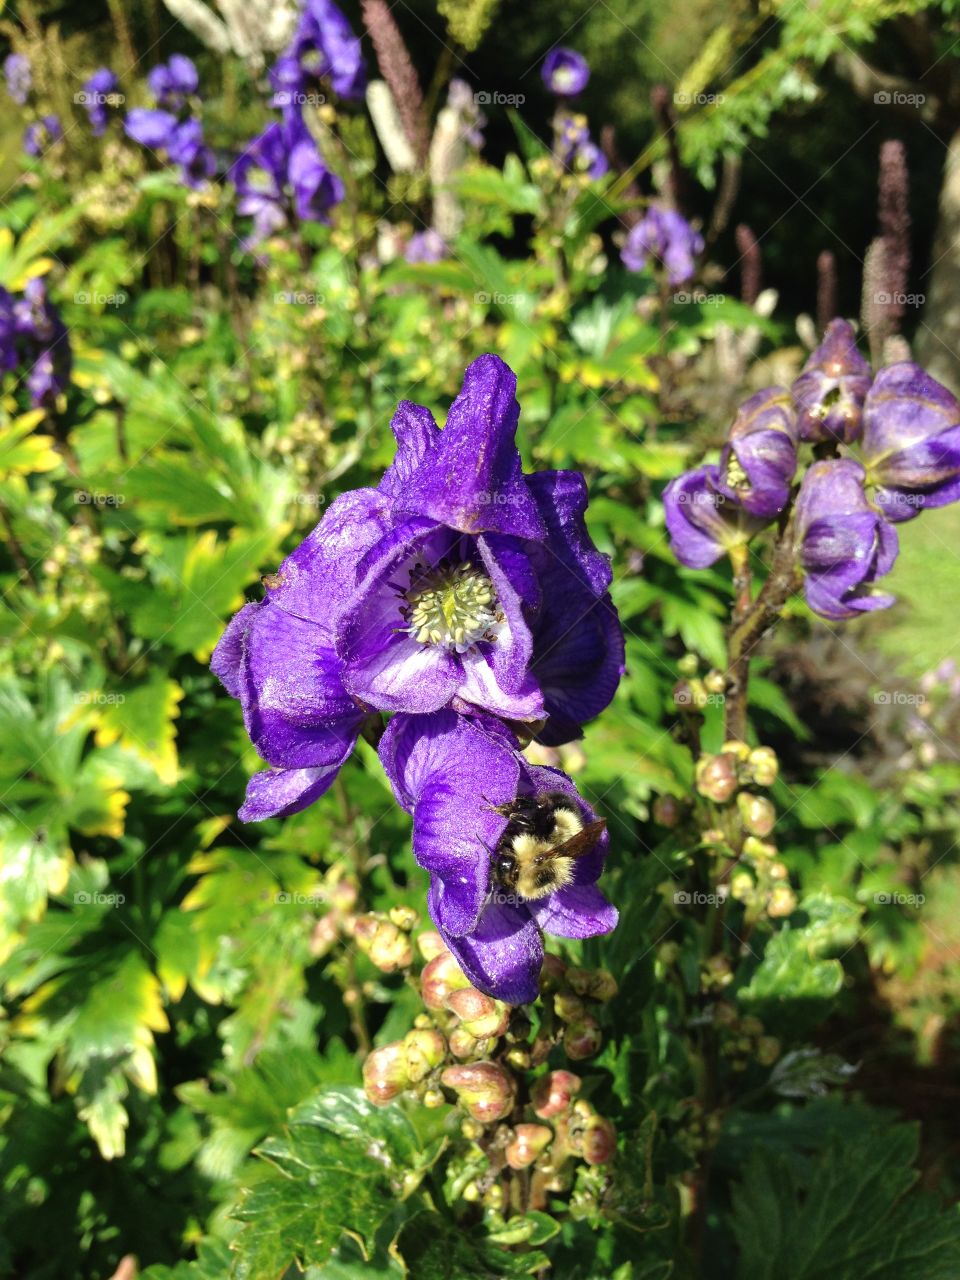 Purpletiful. A special flower in my way